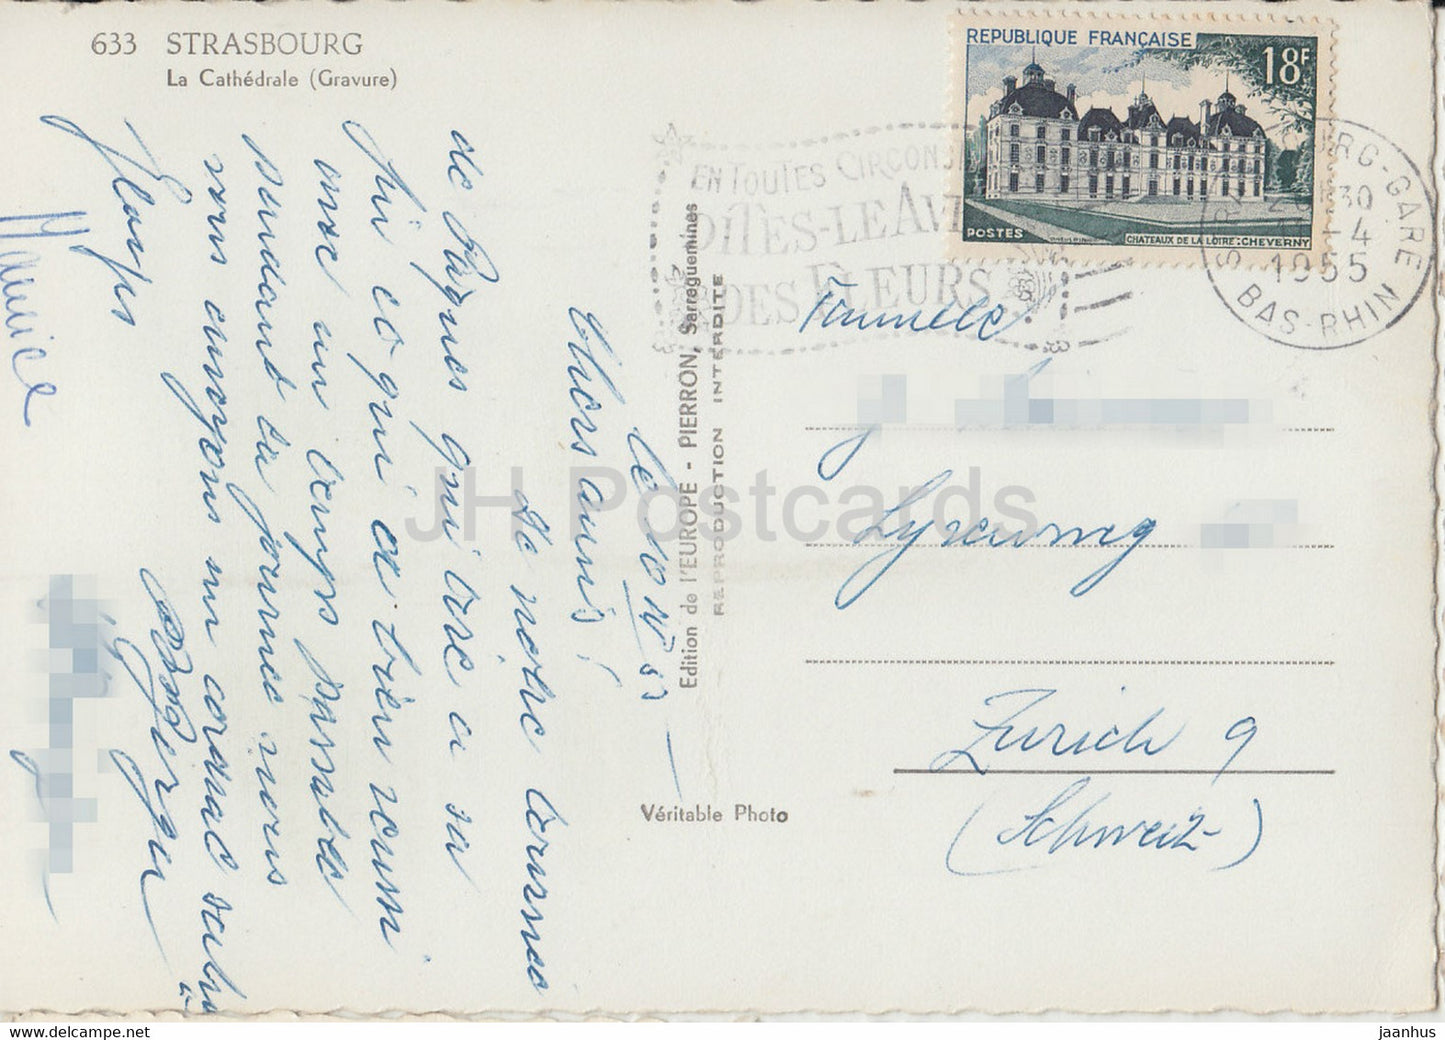 Strasbourg - La Cathedrale - Gravure - cathrdral - old postcard - 1955 - France - used